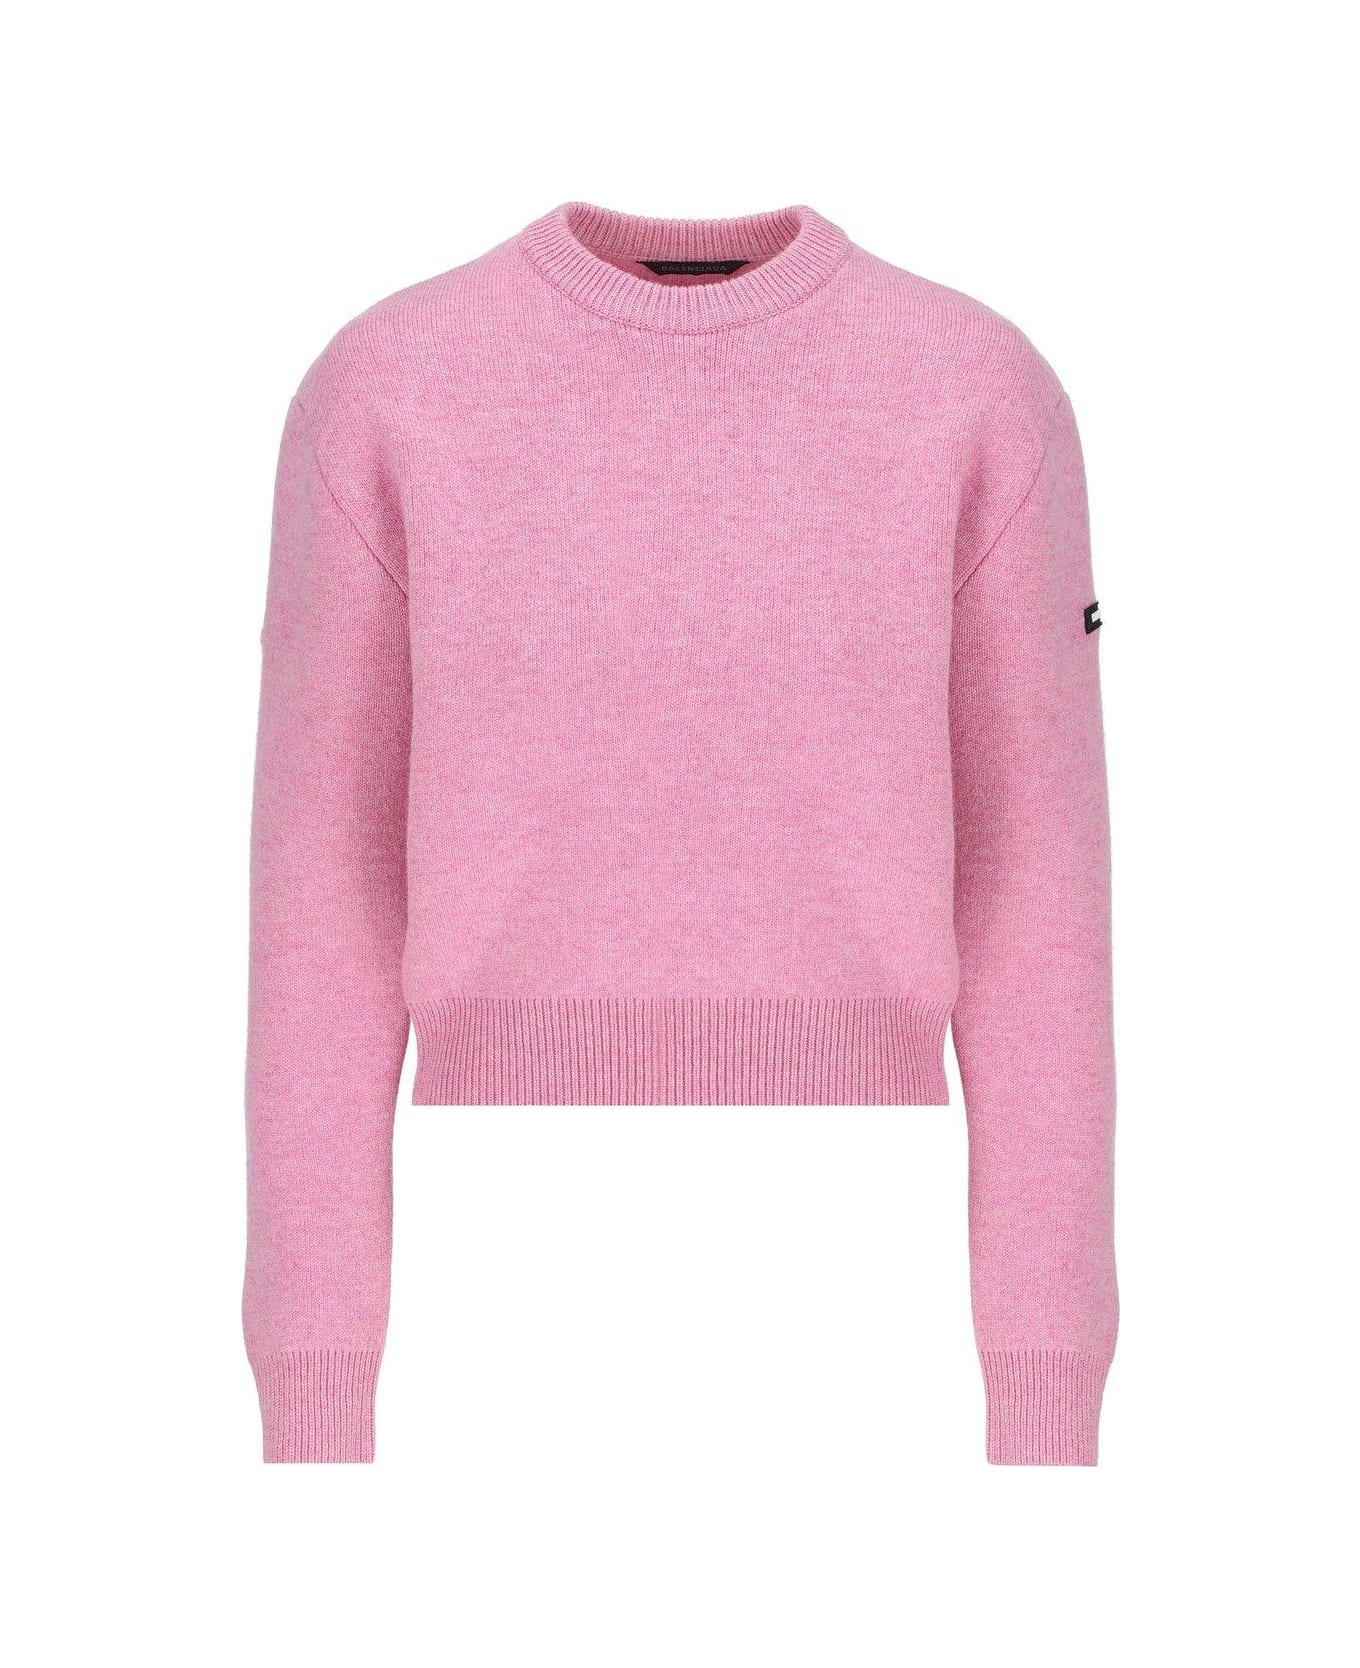 Balenciaga Logo Patch Knitted Jumper - Pink